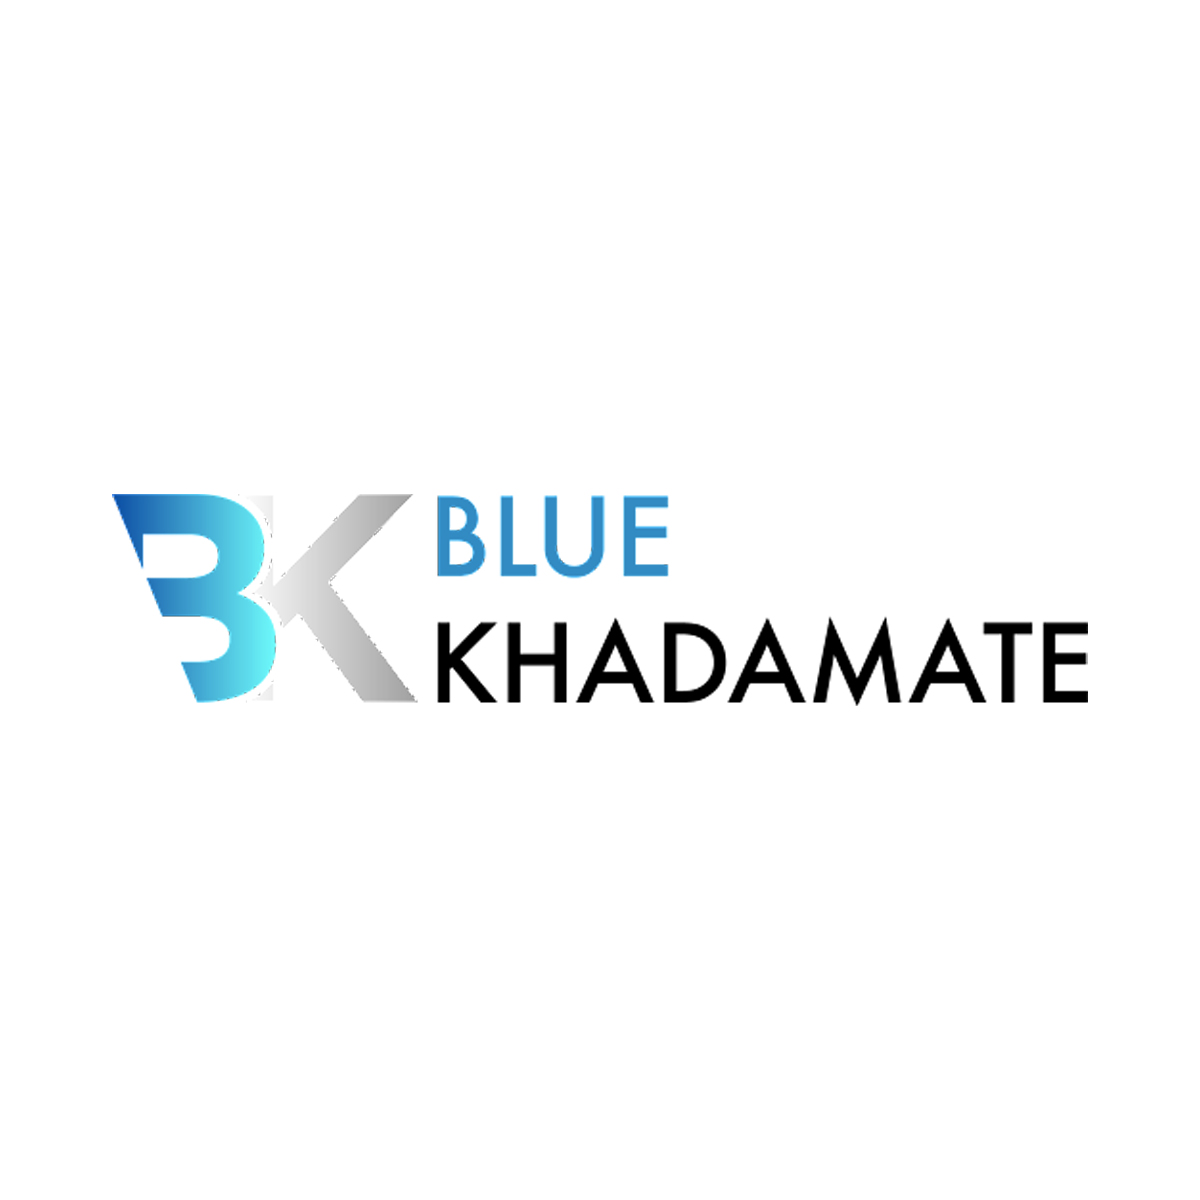 Blue-khadamate LOGO